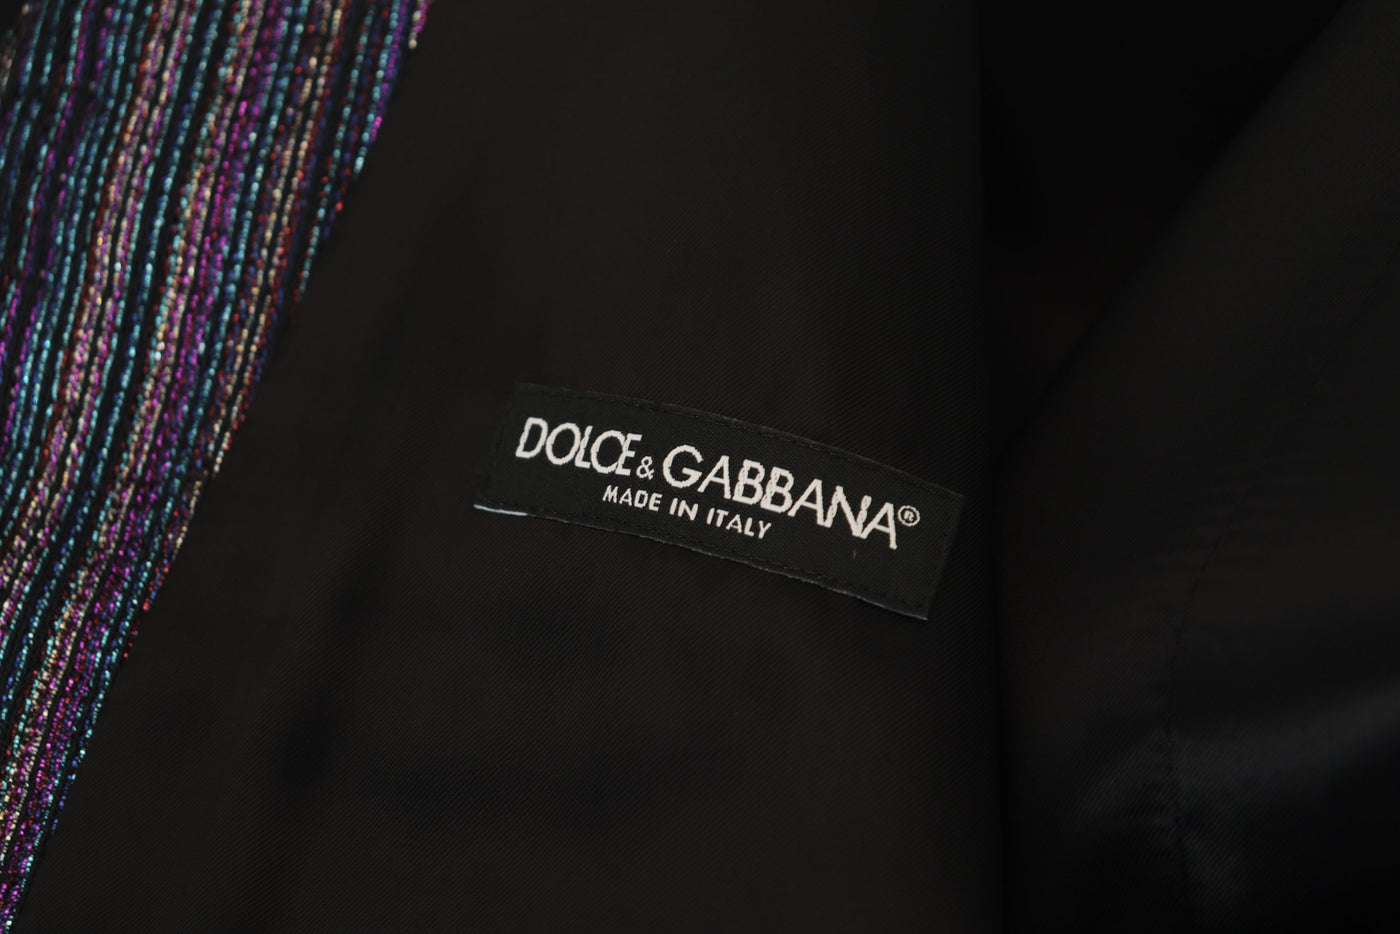 Dolce & Gabbana Multicolor Polyester Waistcoat Dress Formal Vest